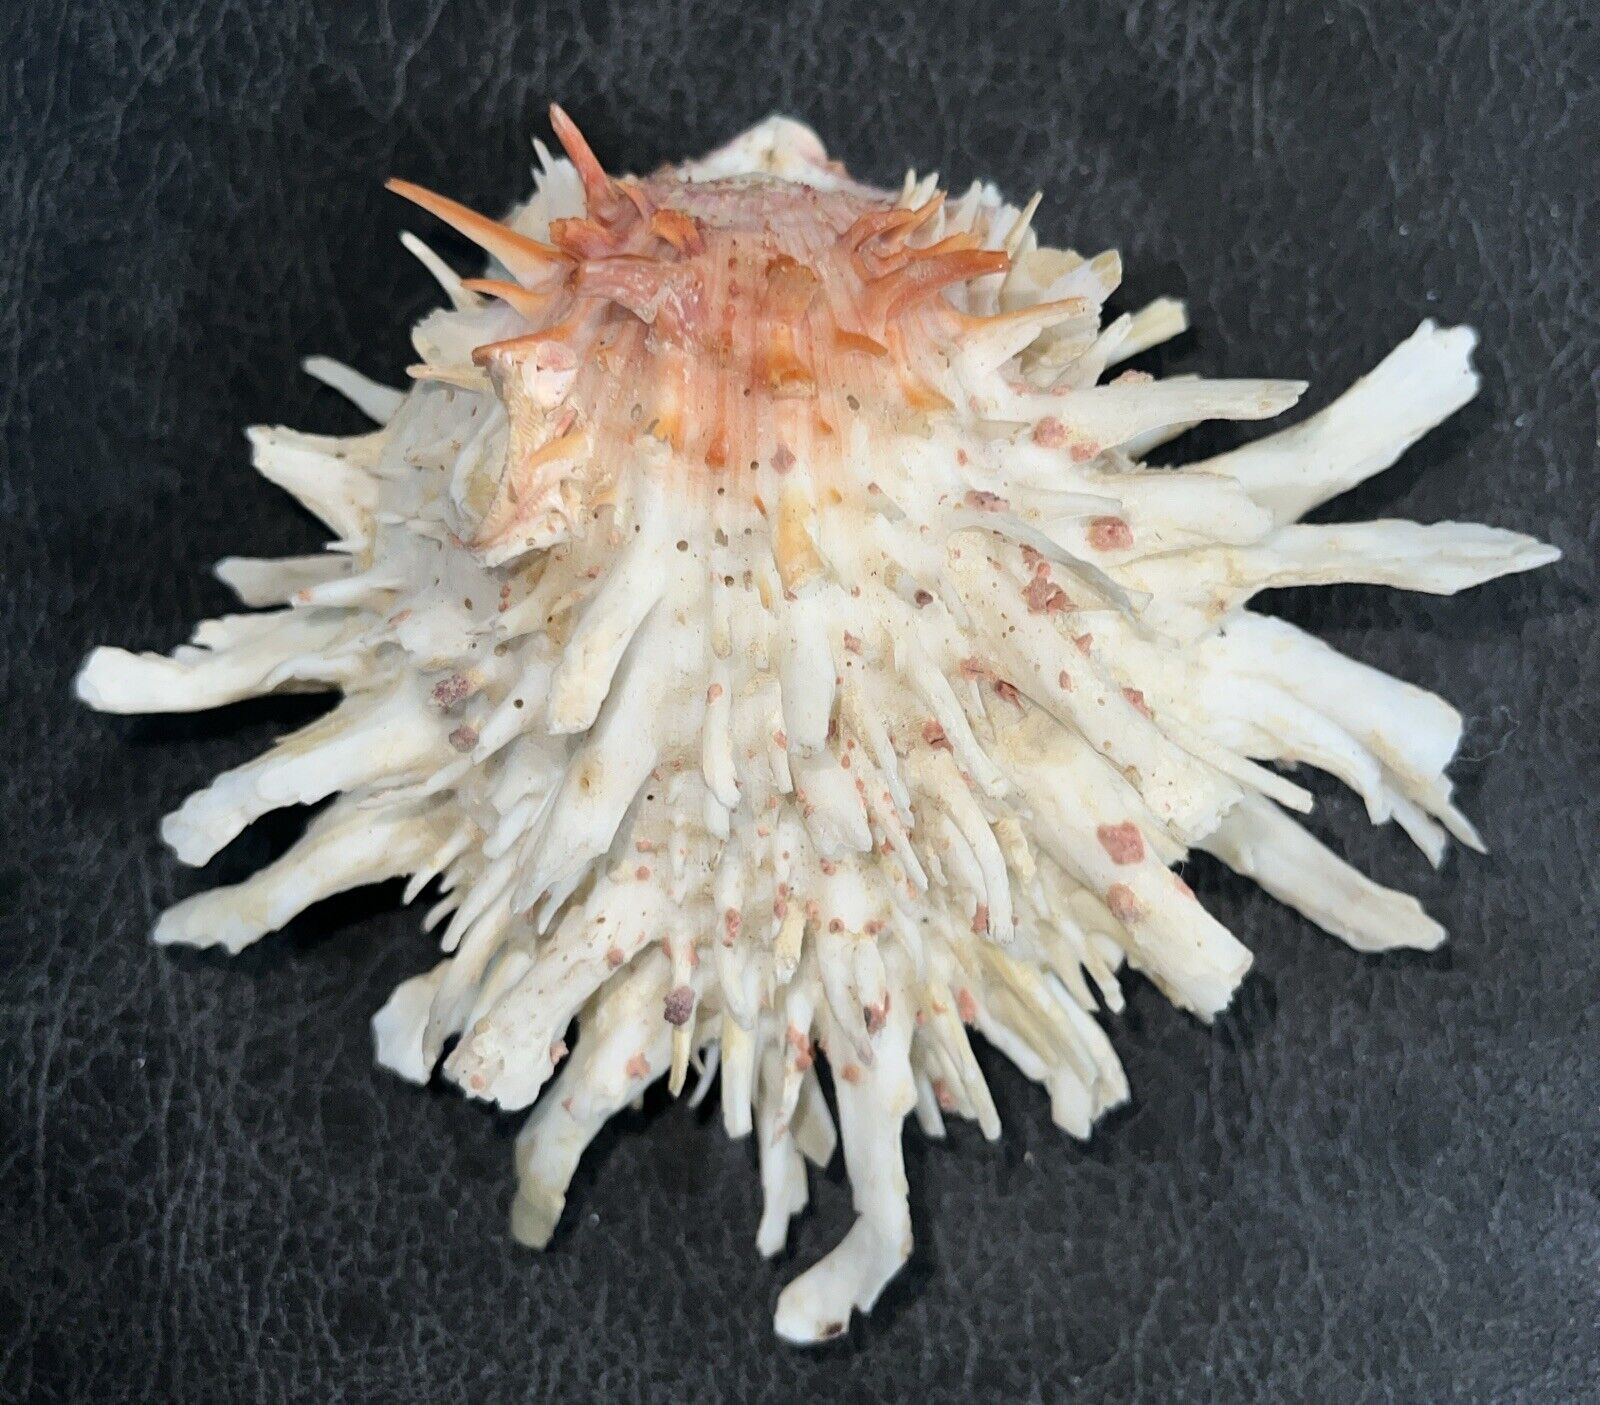 spondylus shell - Spiny Oyster shell-unknown origin. Approximately 6”